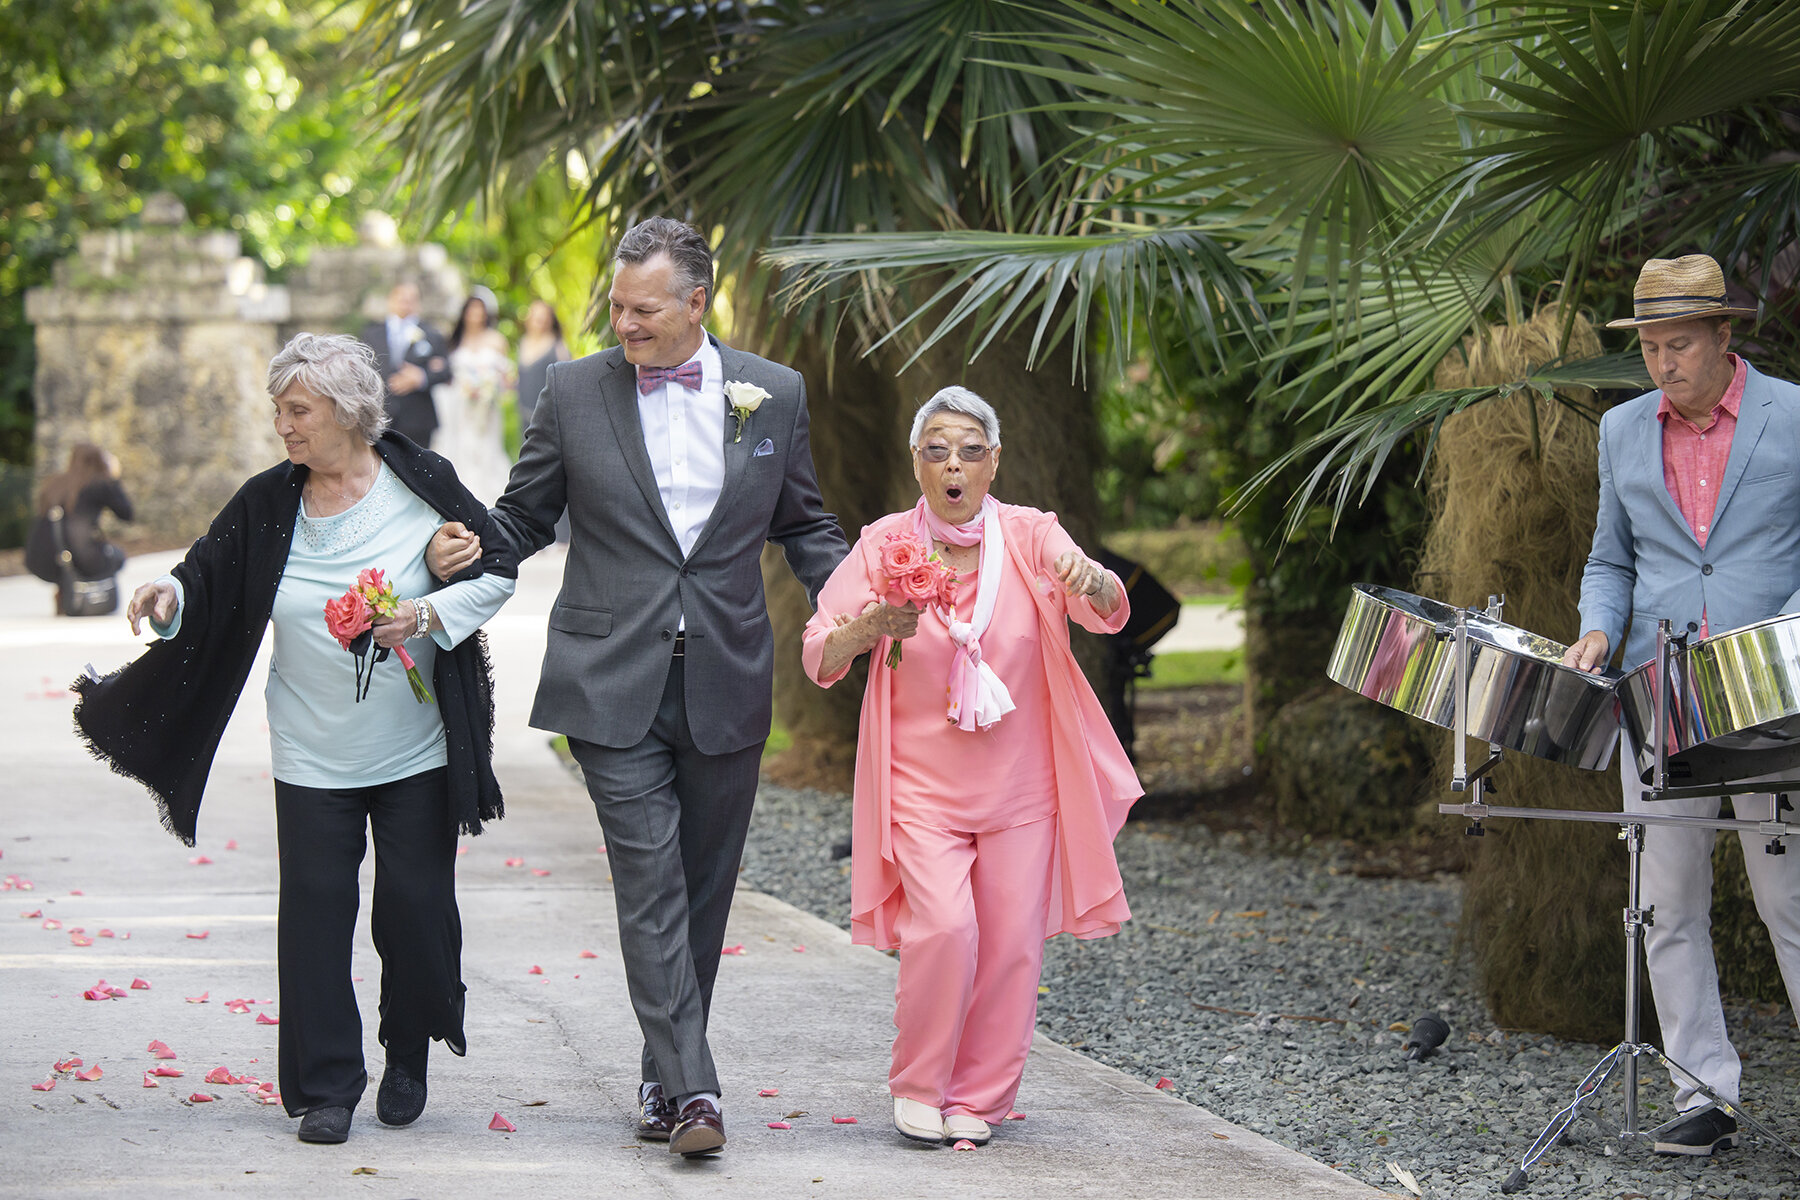 central florida-elegant-beautiful-fun-wedding-photographer-jarstudio (36).jpg